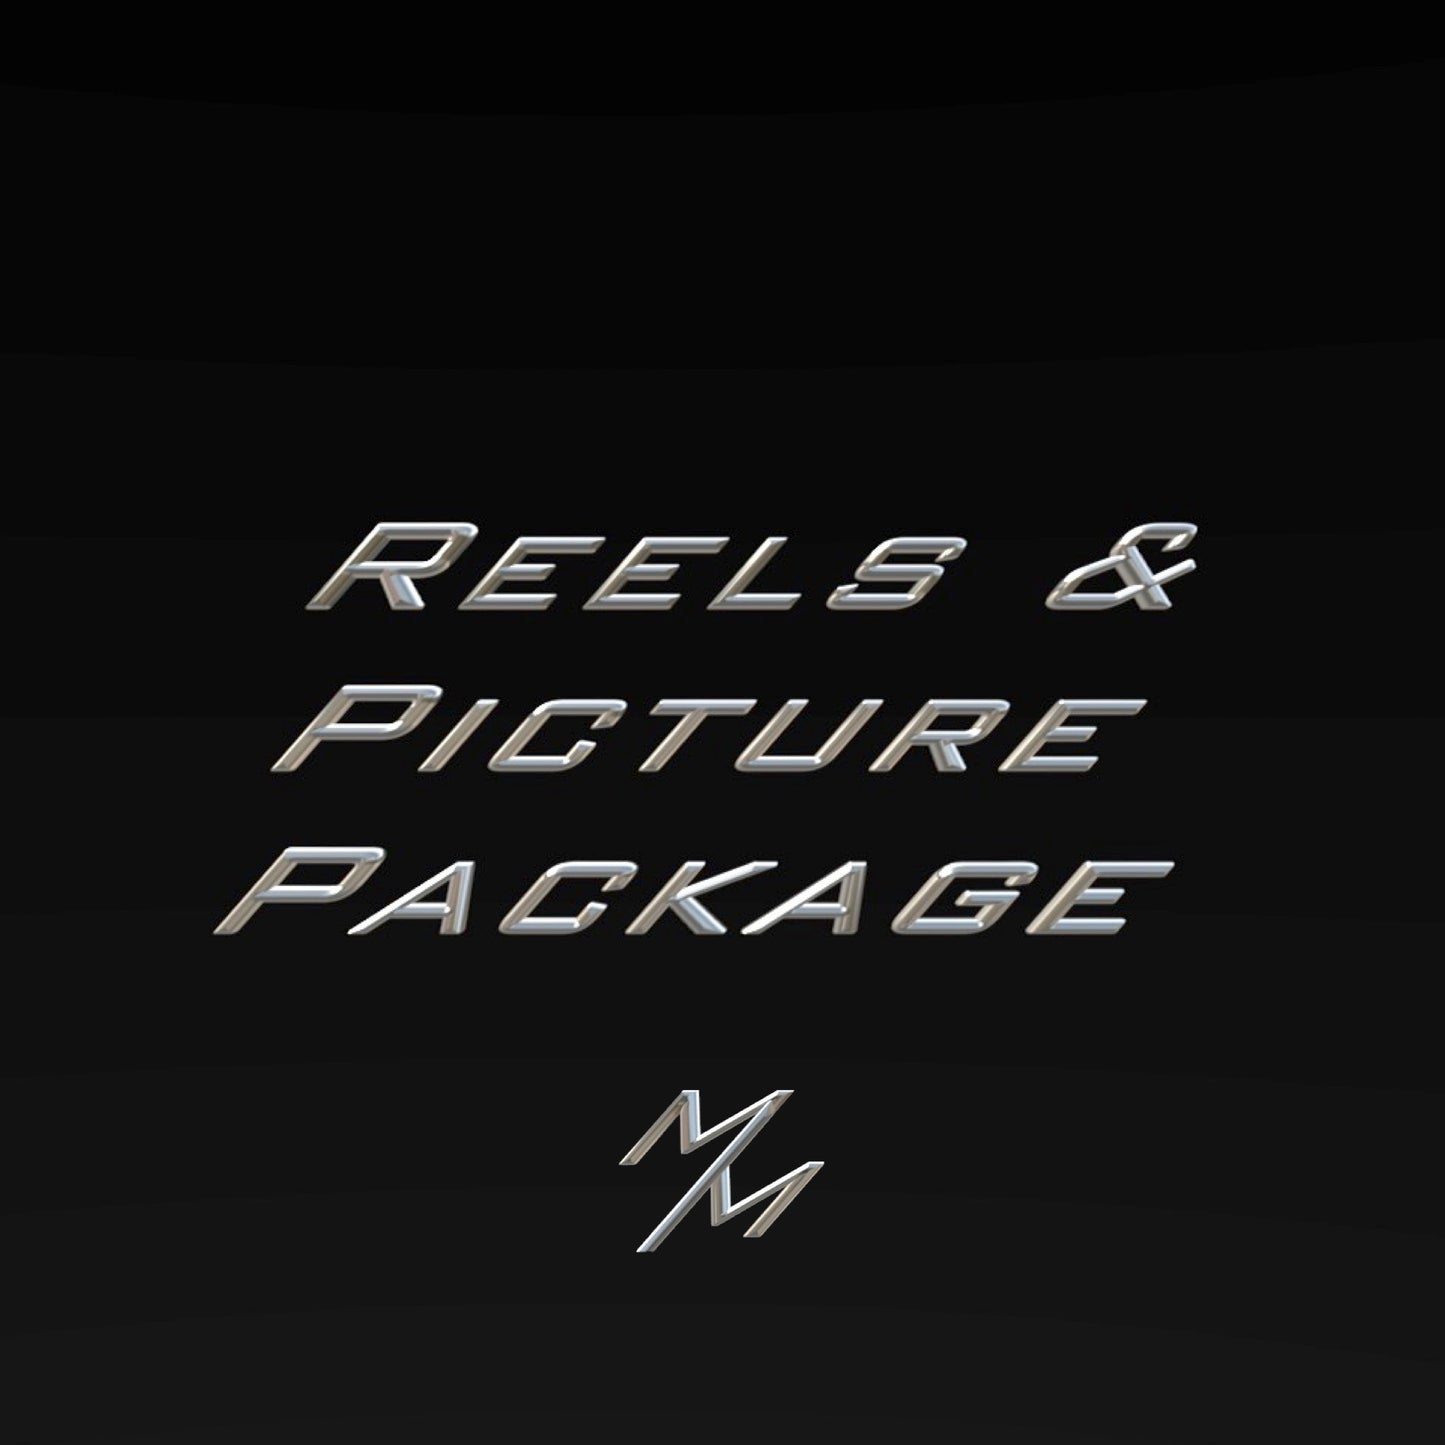 MNDST Media Reels + Pictures Package